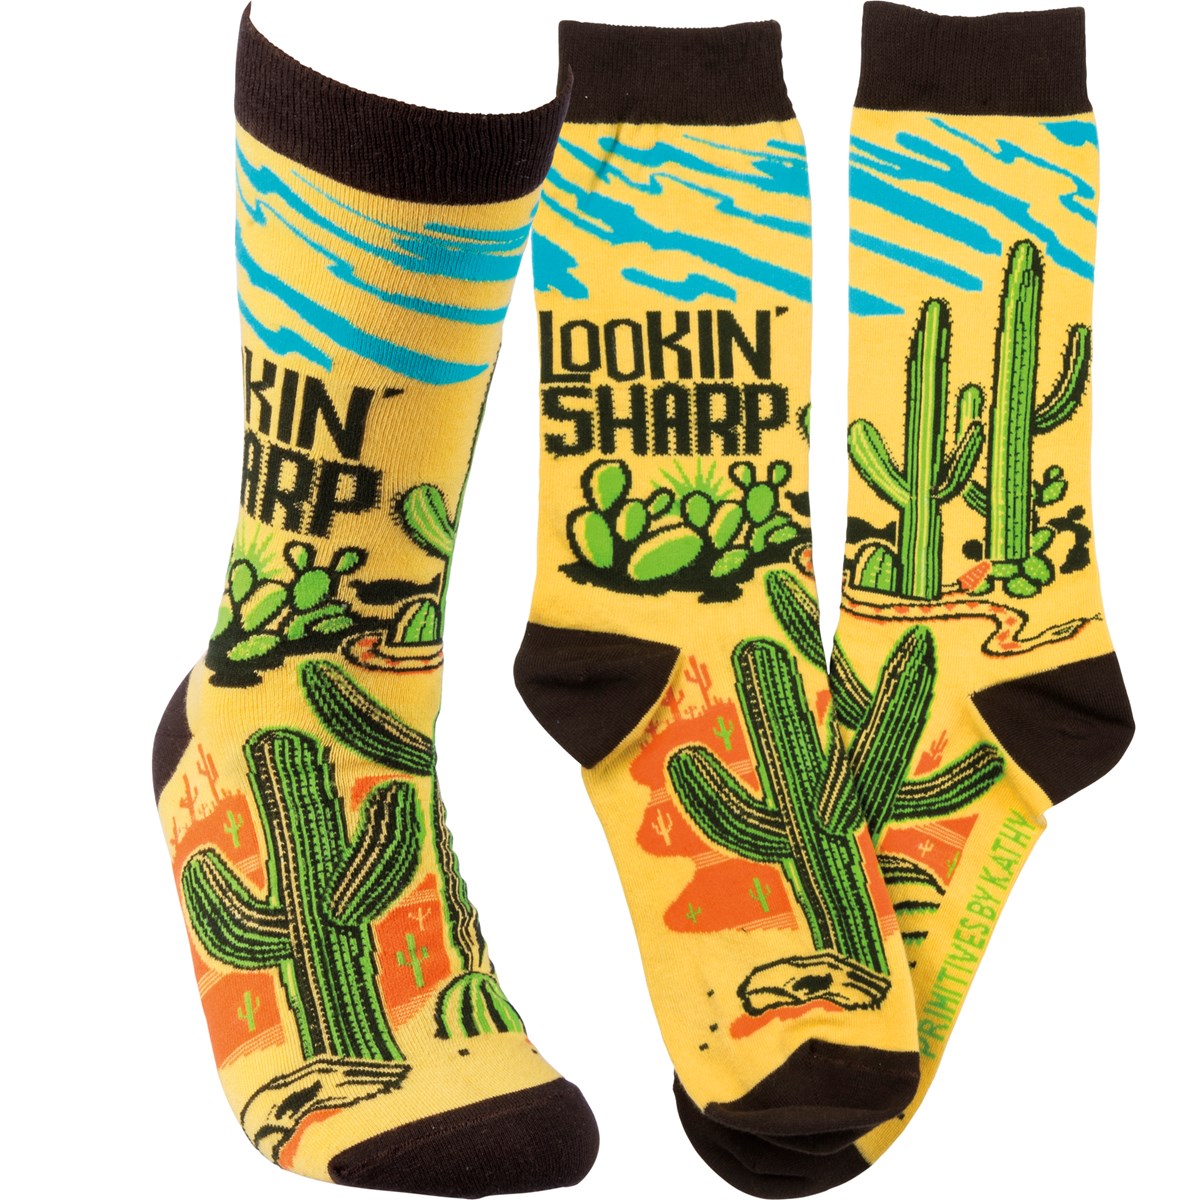 Lookin' Sharp Socks - Cotton, Nylon, Spandex